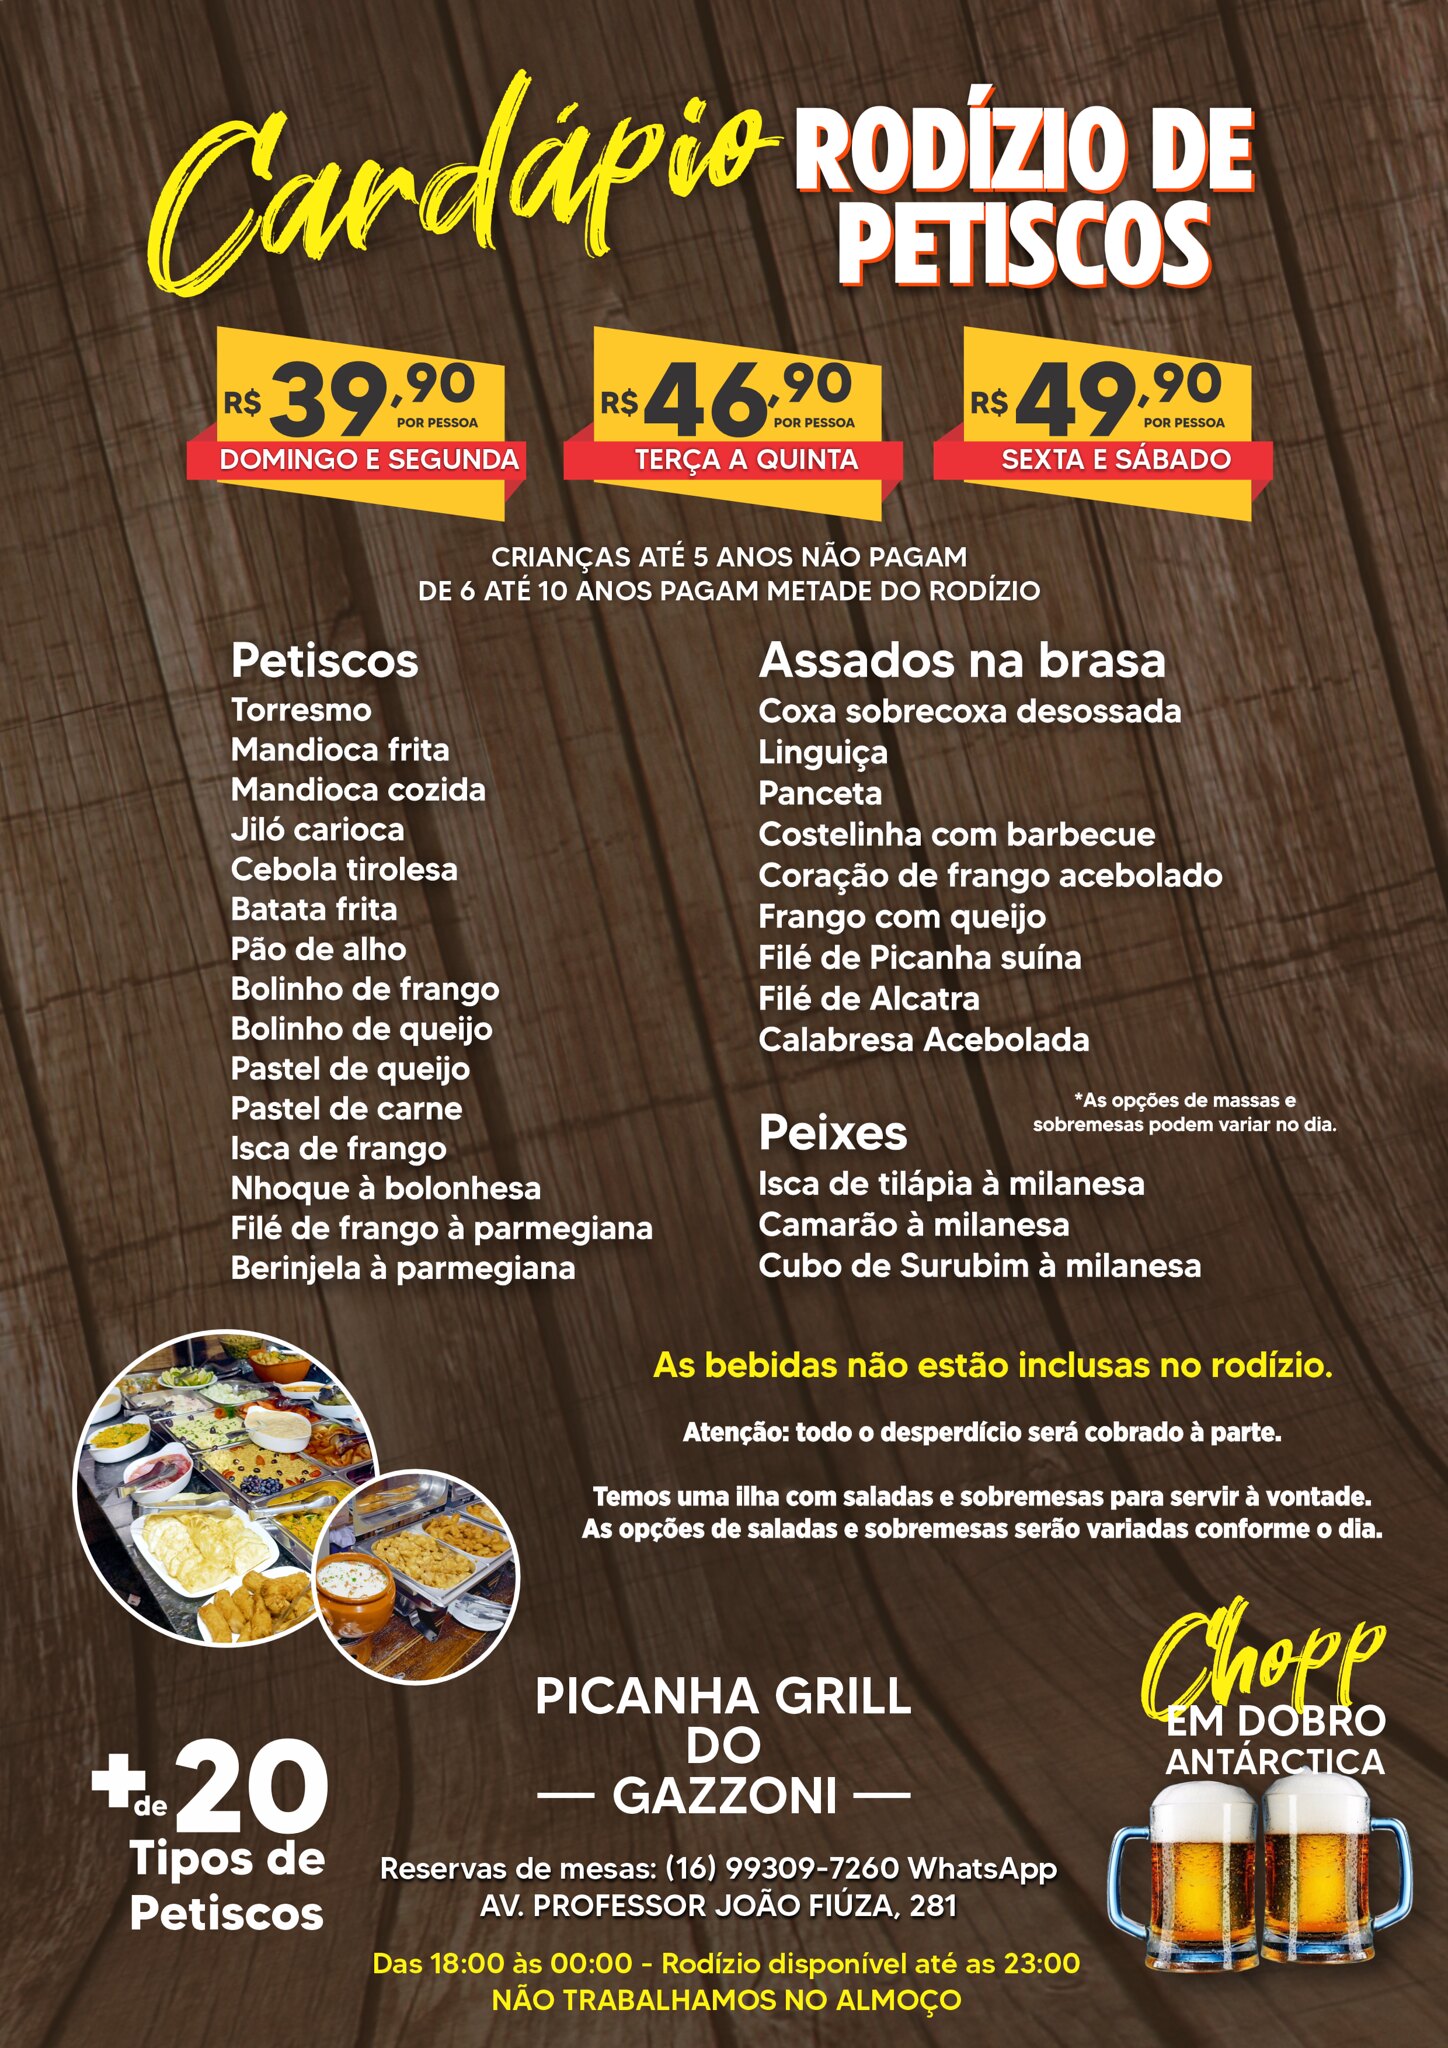 Picanha Grill do Gazzoni - Cardápio Rodízio Novo